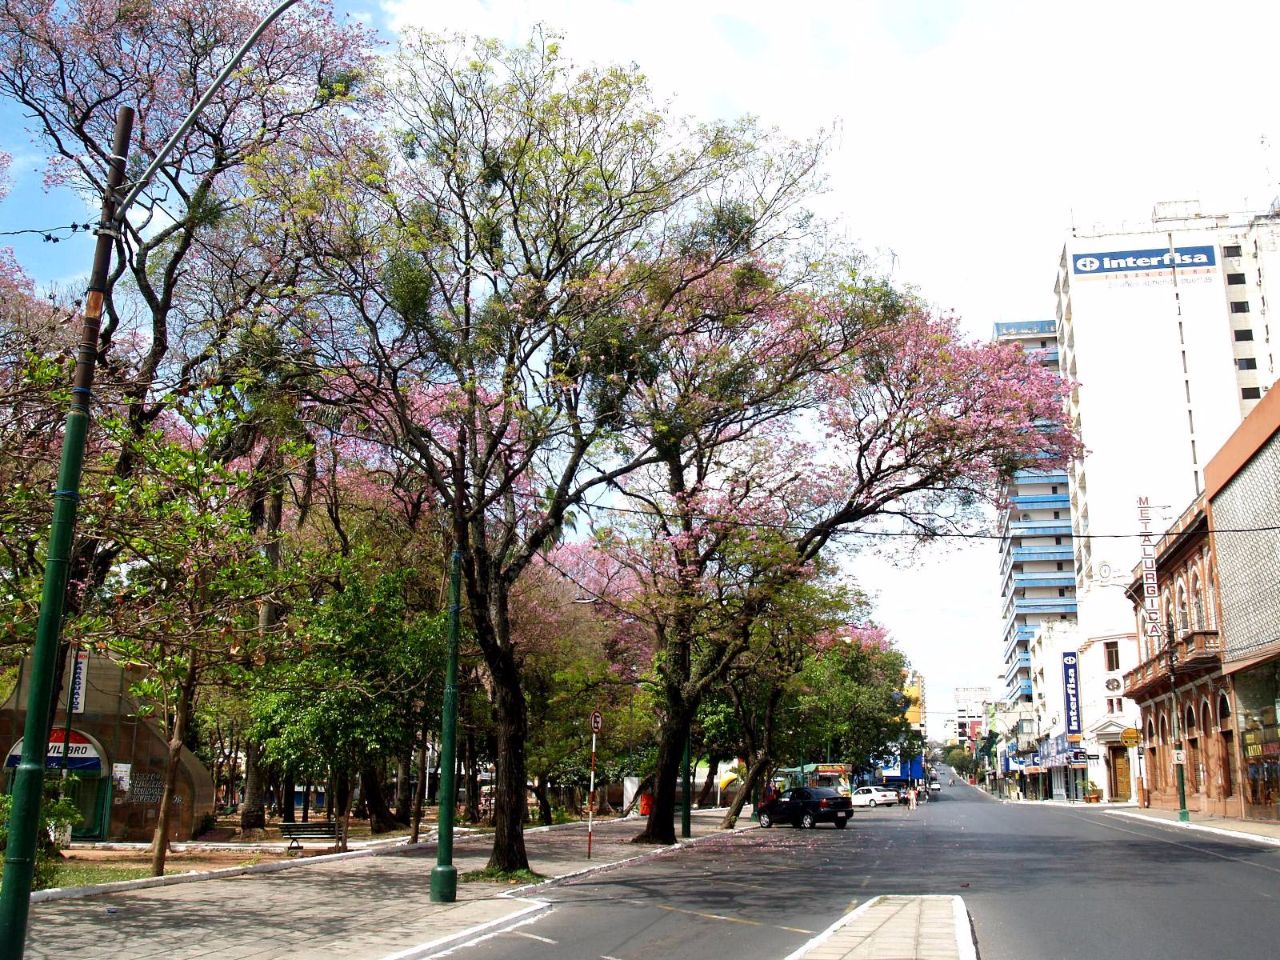 Уругвайская площадь Асунсьон, Парагвай